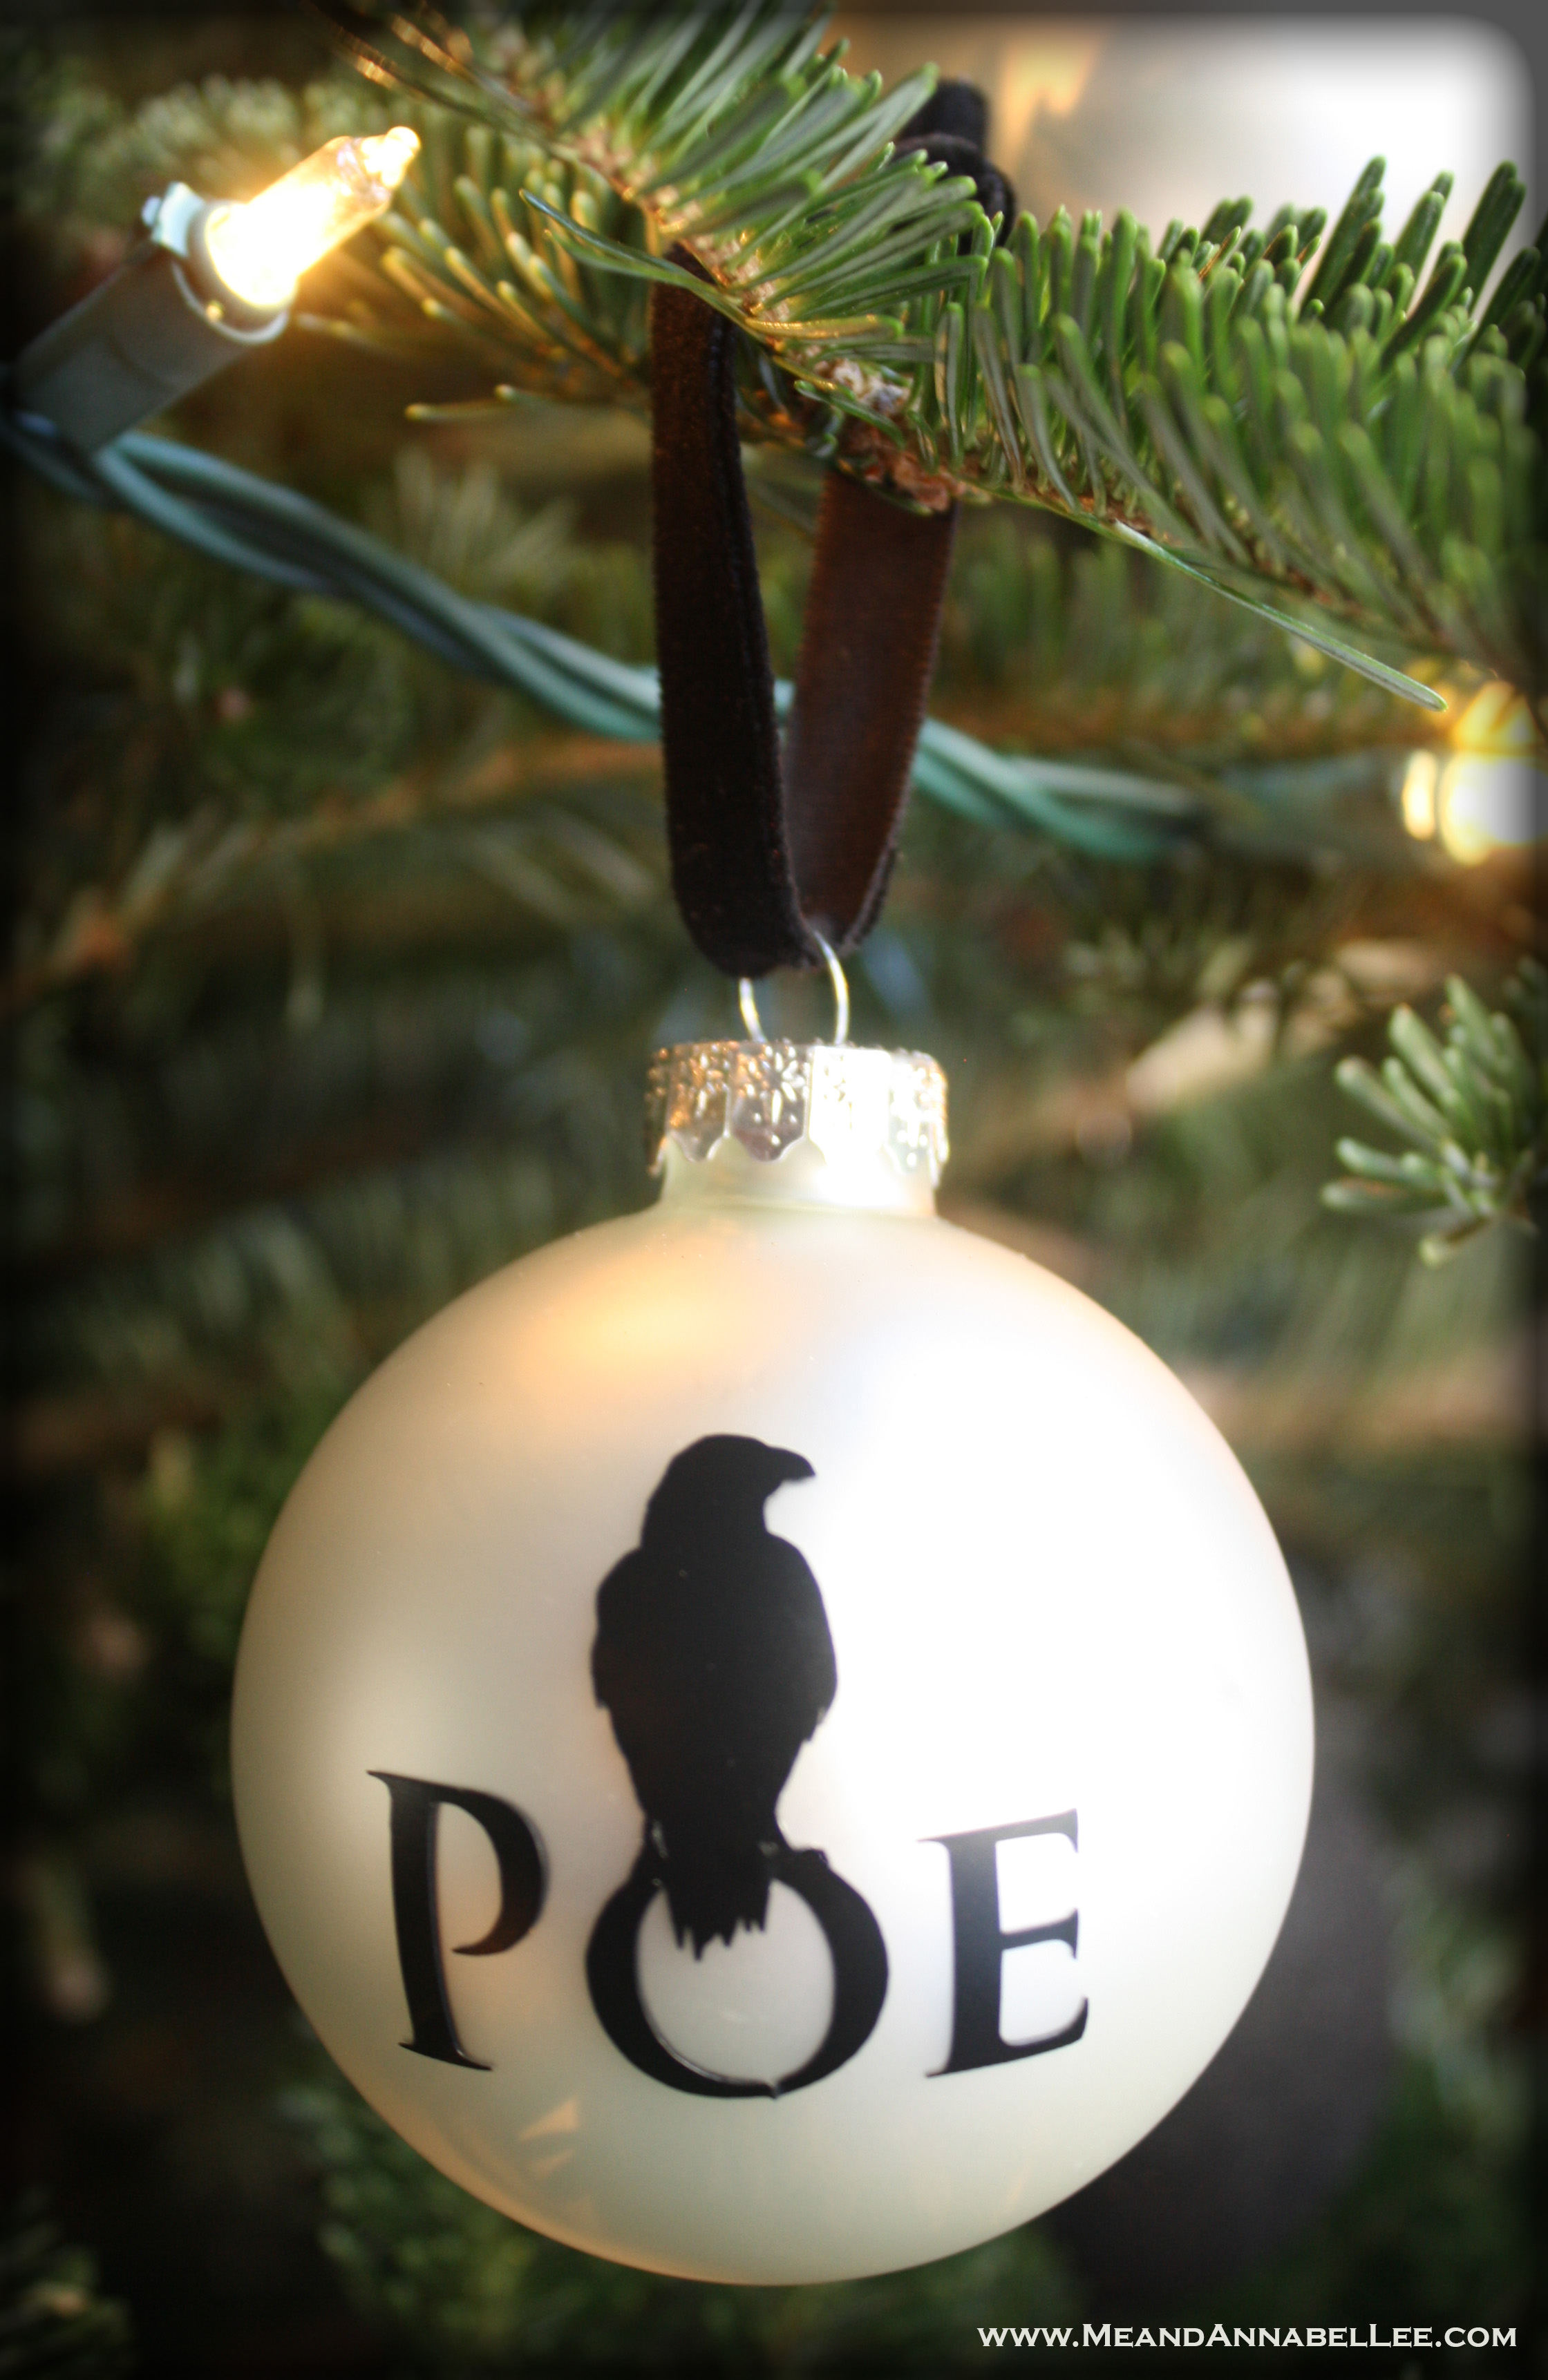 DIY Edgar Allan Poe Christmas Ornaments | Raven | Nevermore | Annabel Lee | www.MeandAnnabelLee.com